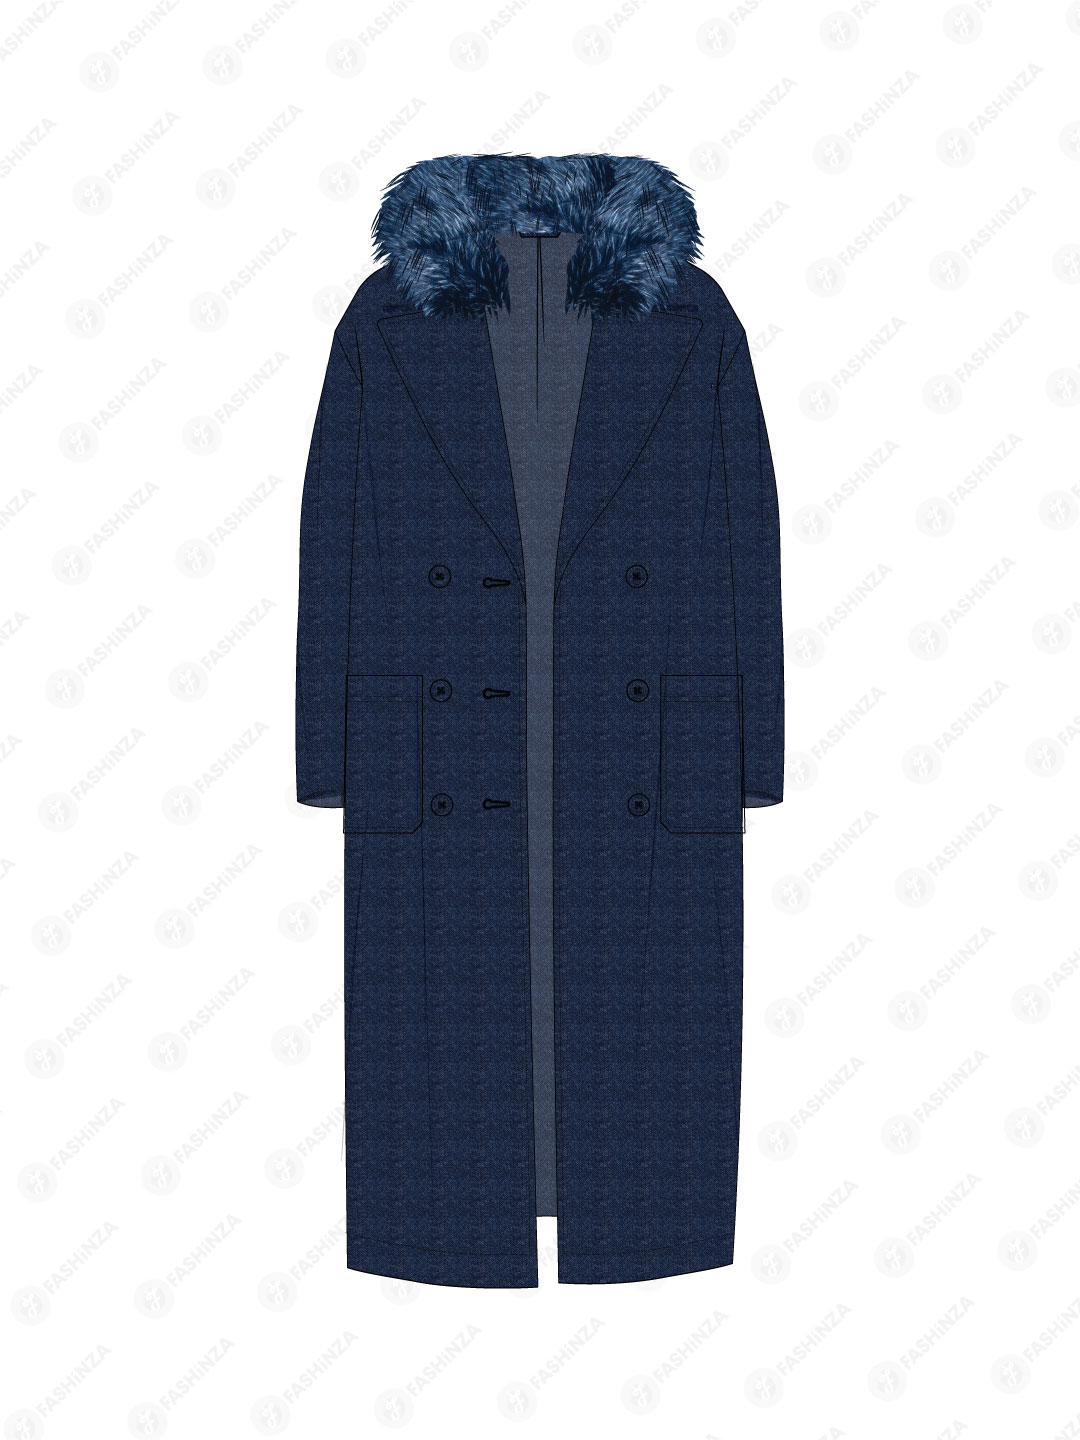 Women’s Long Denim Coat With Fur Collar & Patch Pockets